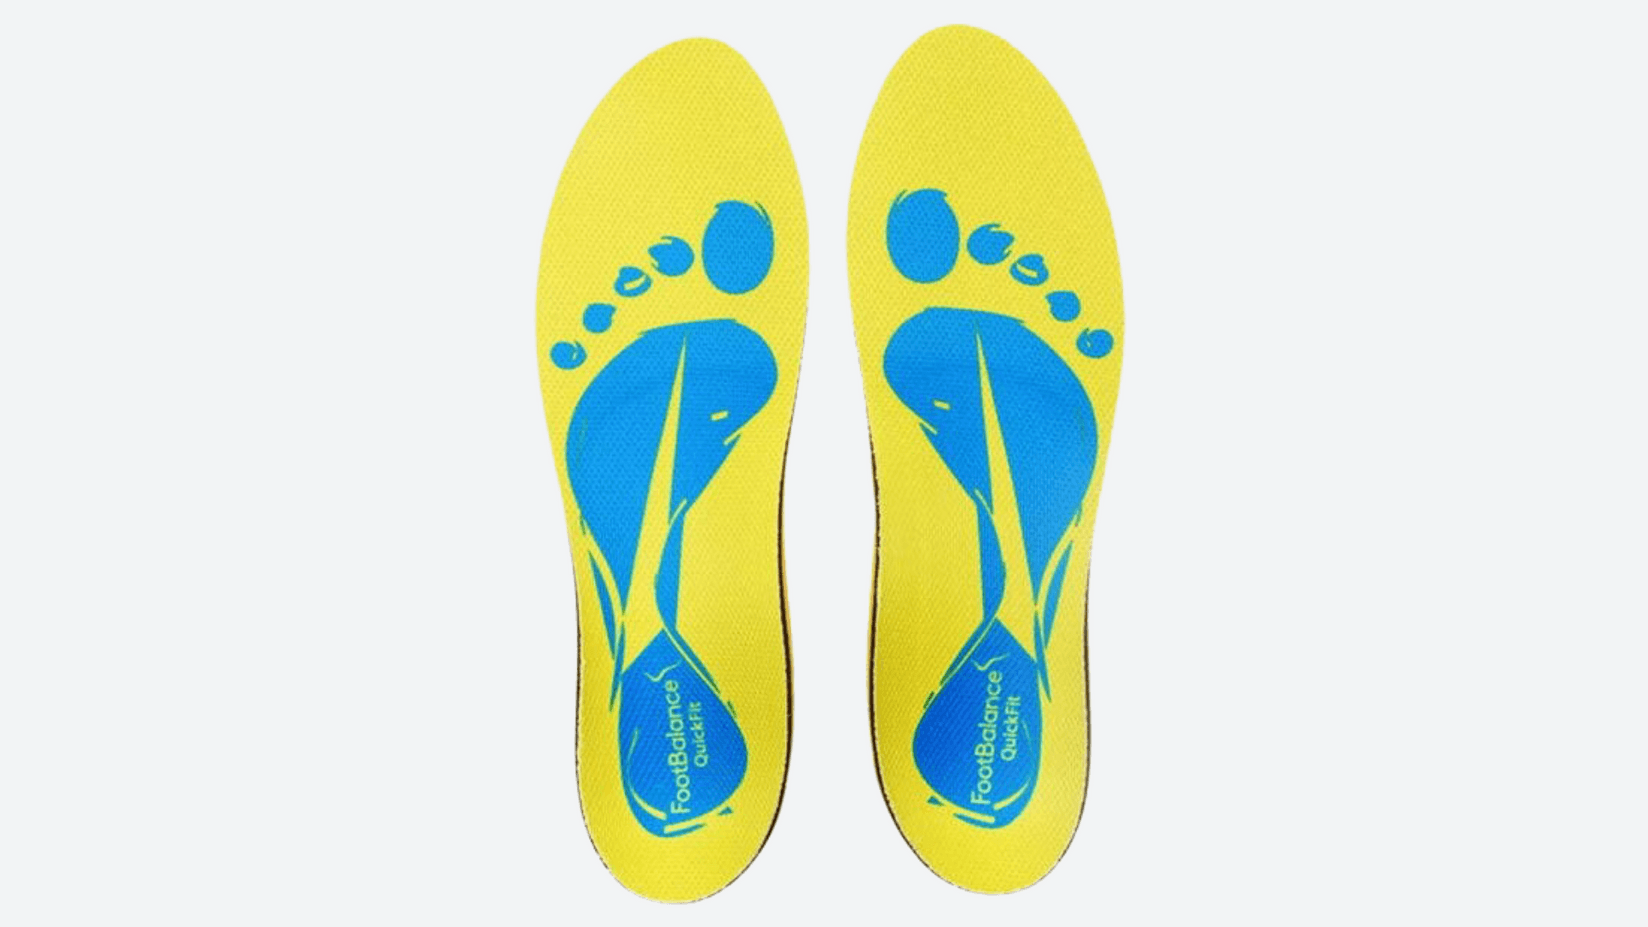 FootBalance Quickfit Narrow MID-HIGH Ulošci za obuću, Žuti